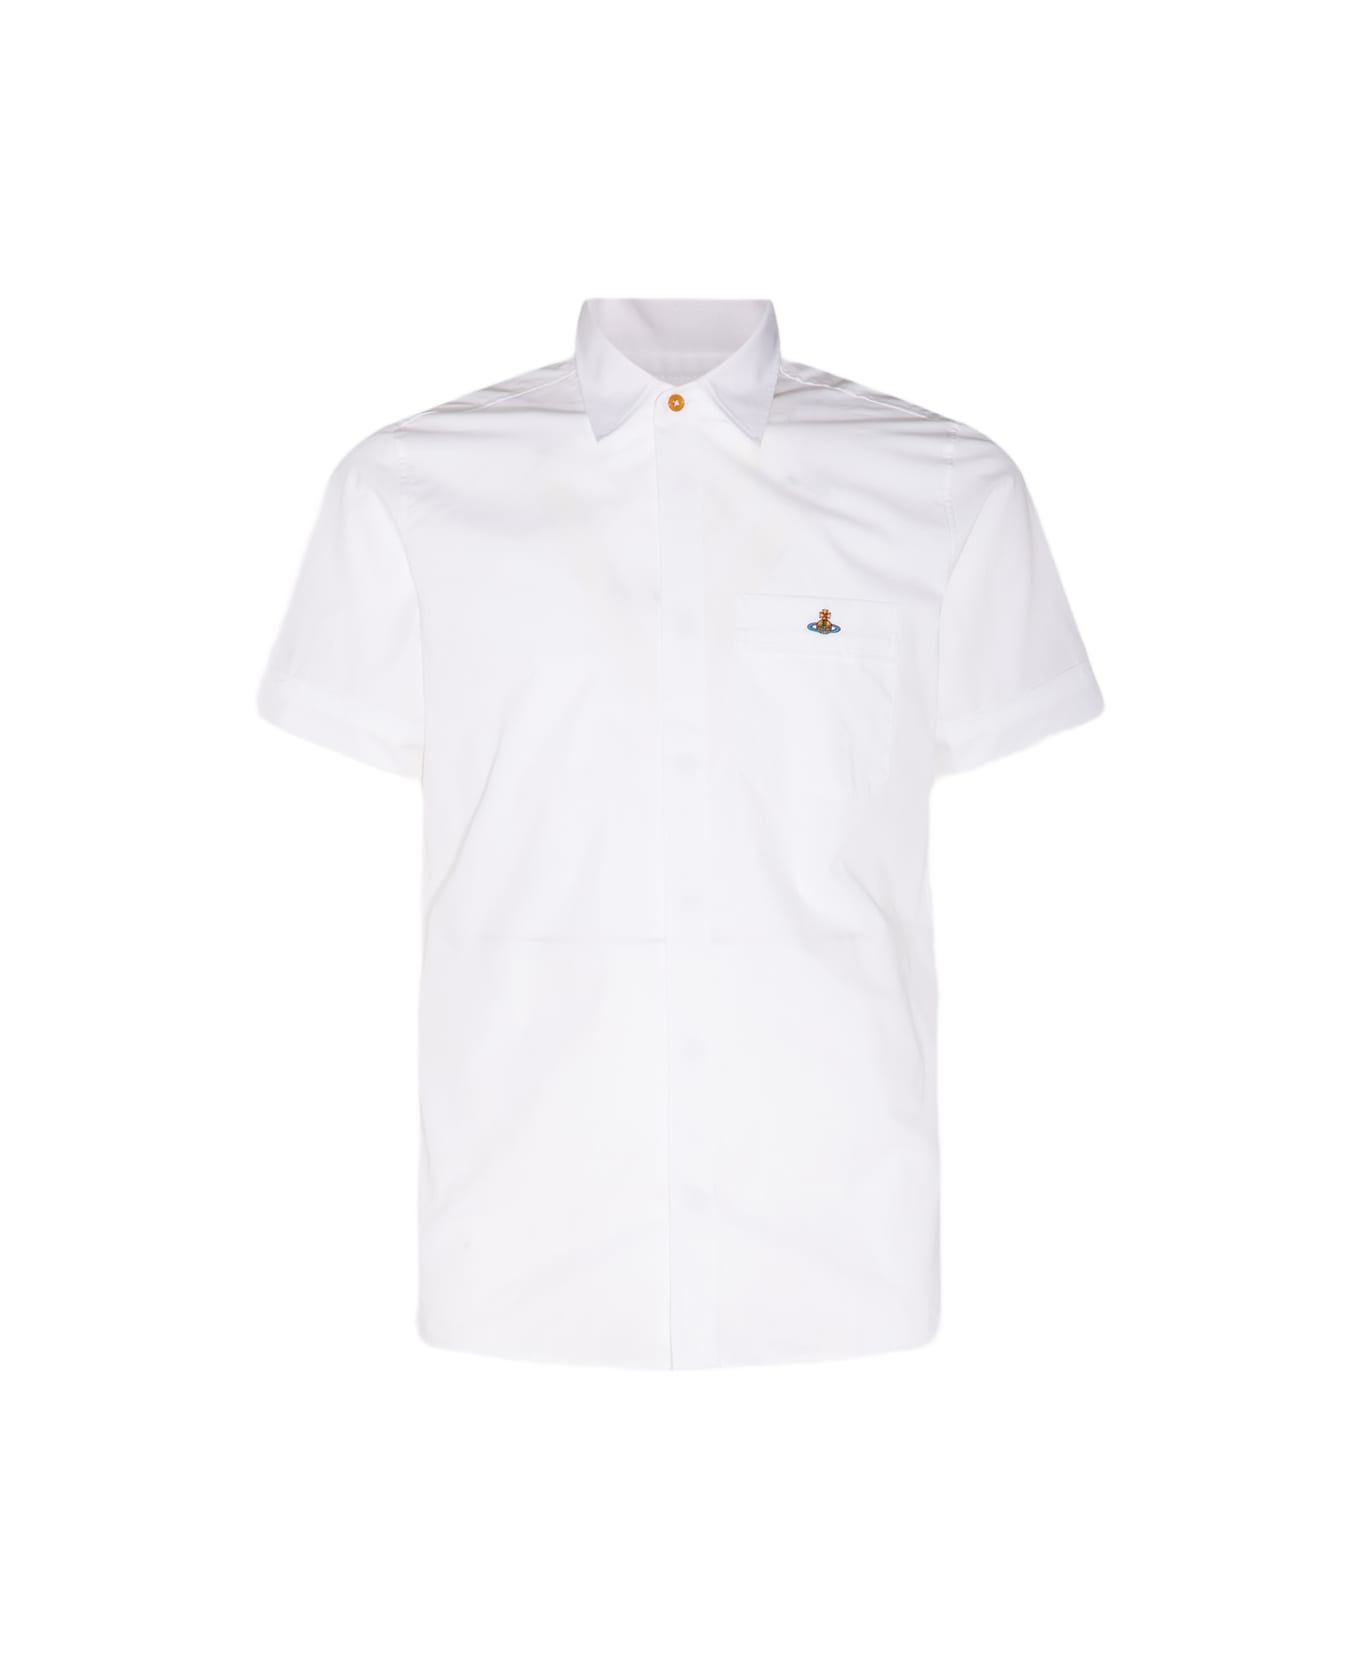 Vivienne Westwood White Cotton Shirt - White